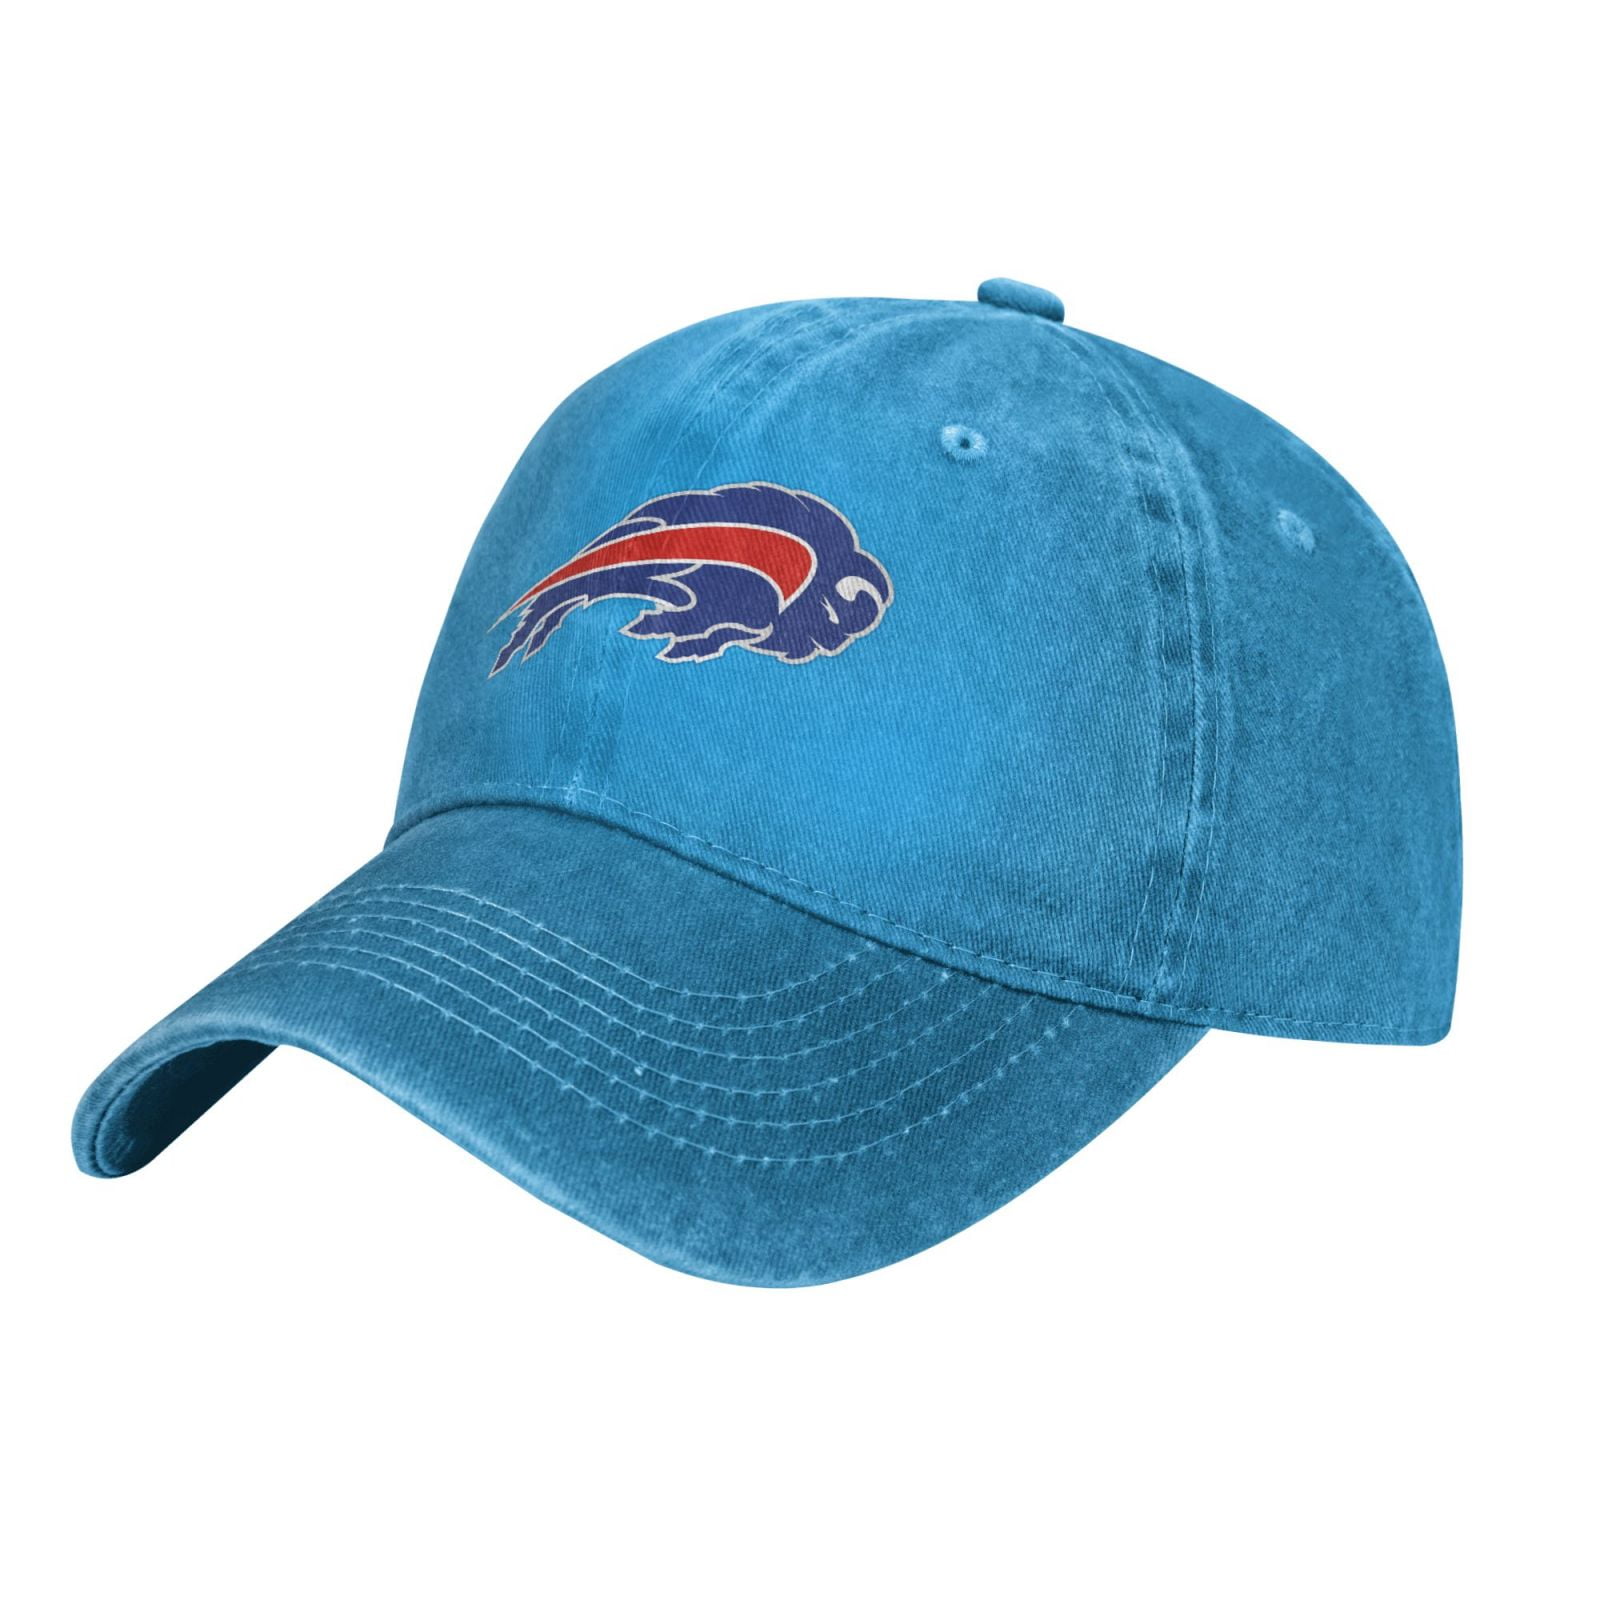 Buffalo-Bills Fashion Custom Hats Caps For Men Women, Adjustable ...